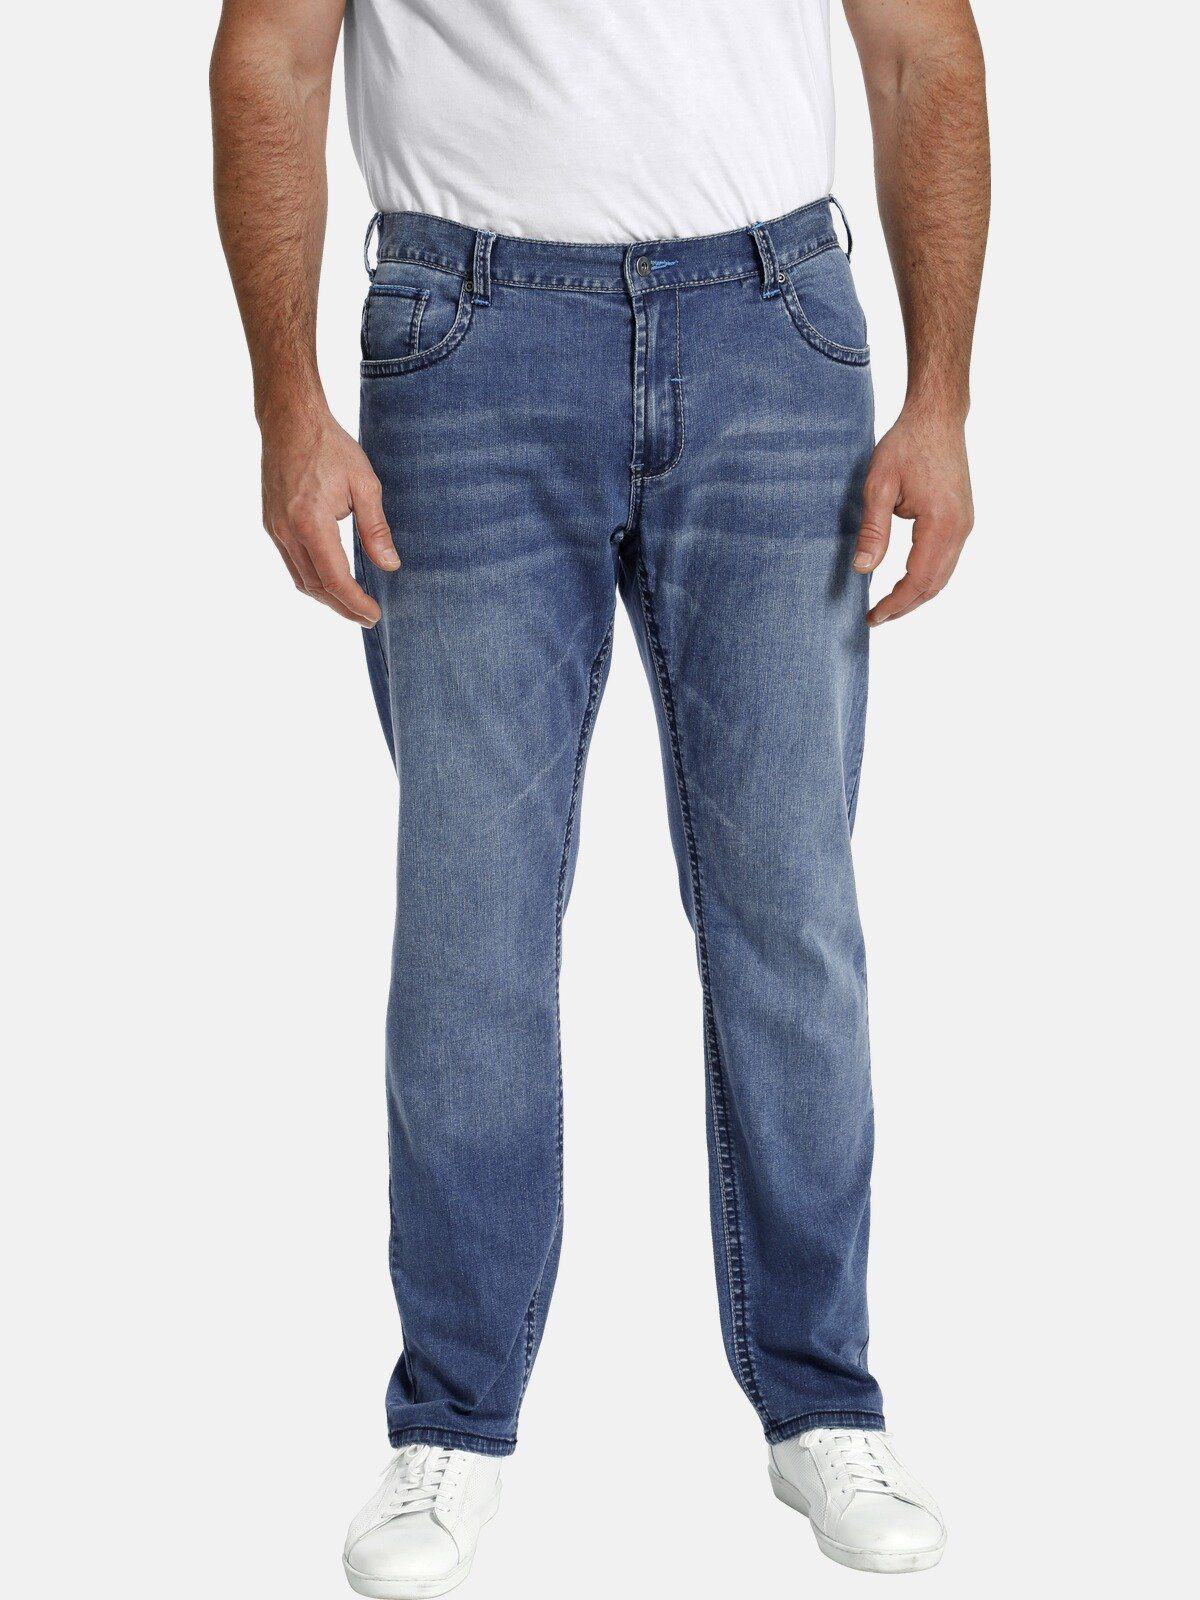 Charles Colby 5-Pocket-Jeans BARON SAWYER +Fit Kollektion, Tiefbundjeans